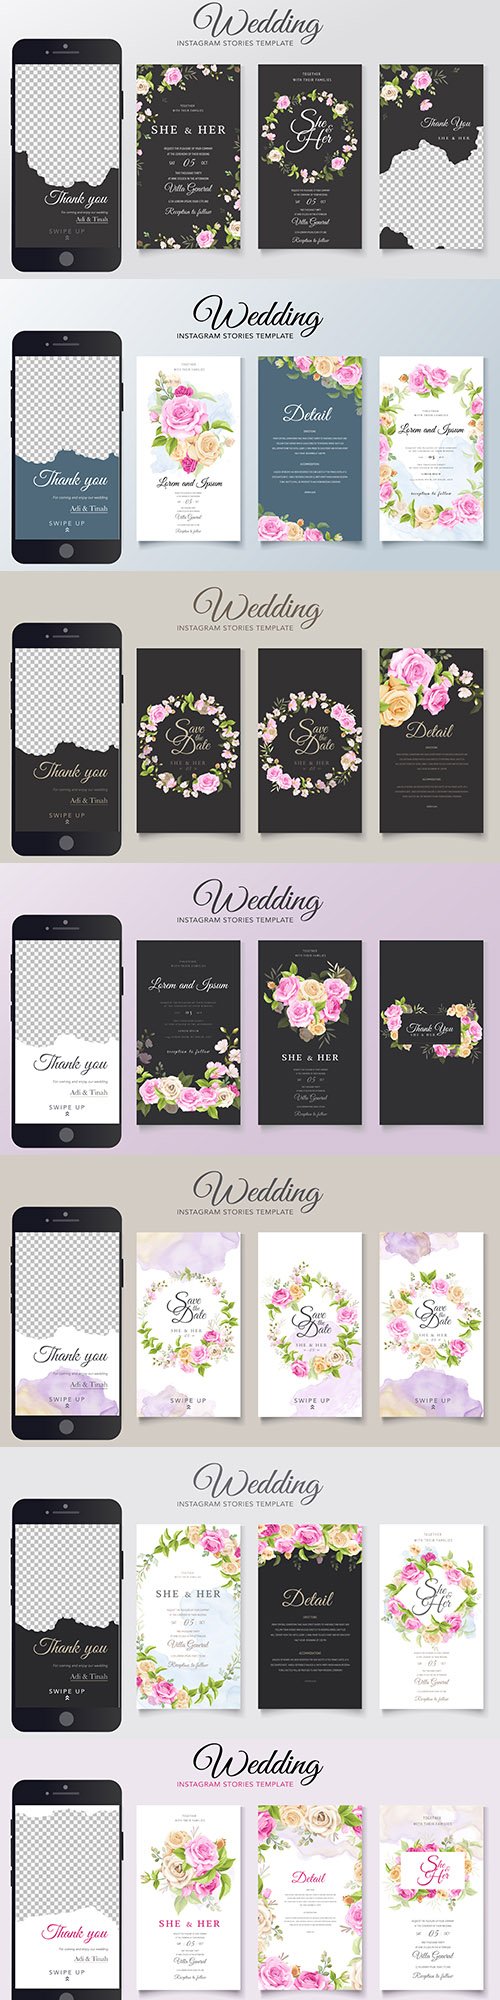 Instagram design wedding invitation template